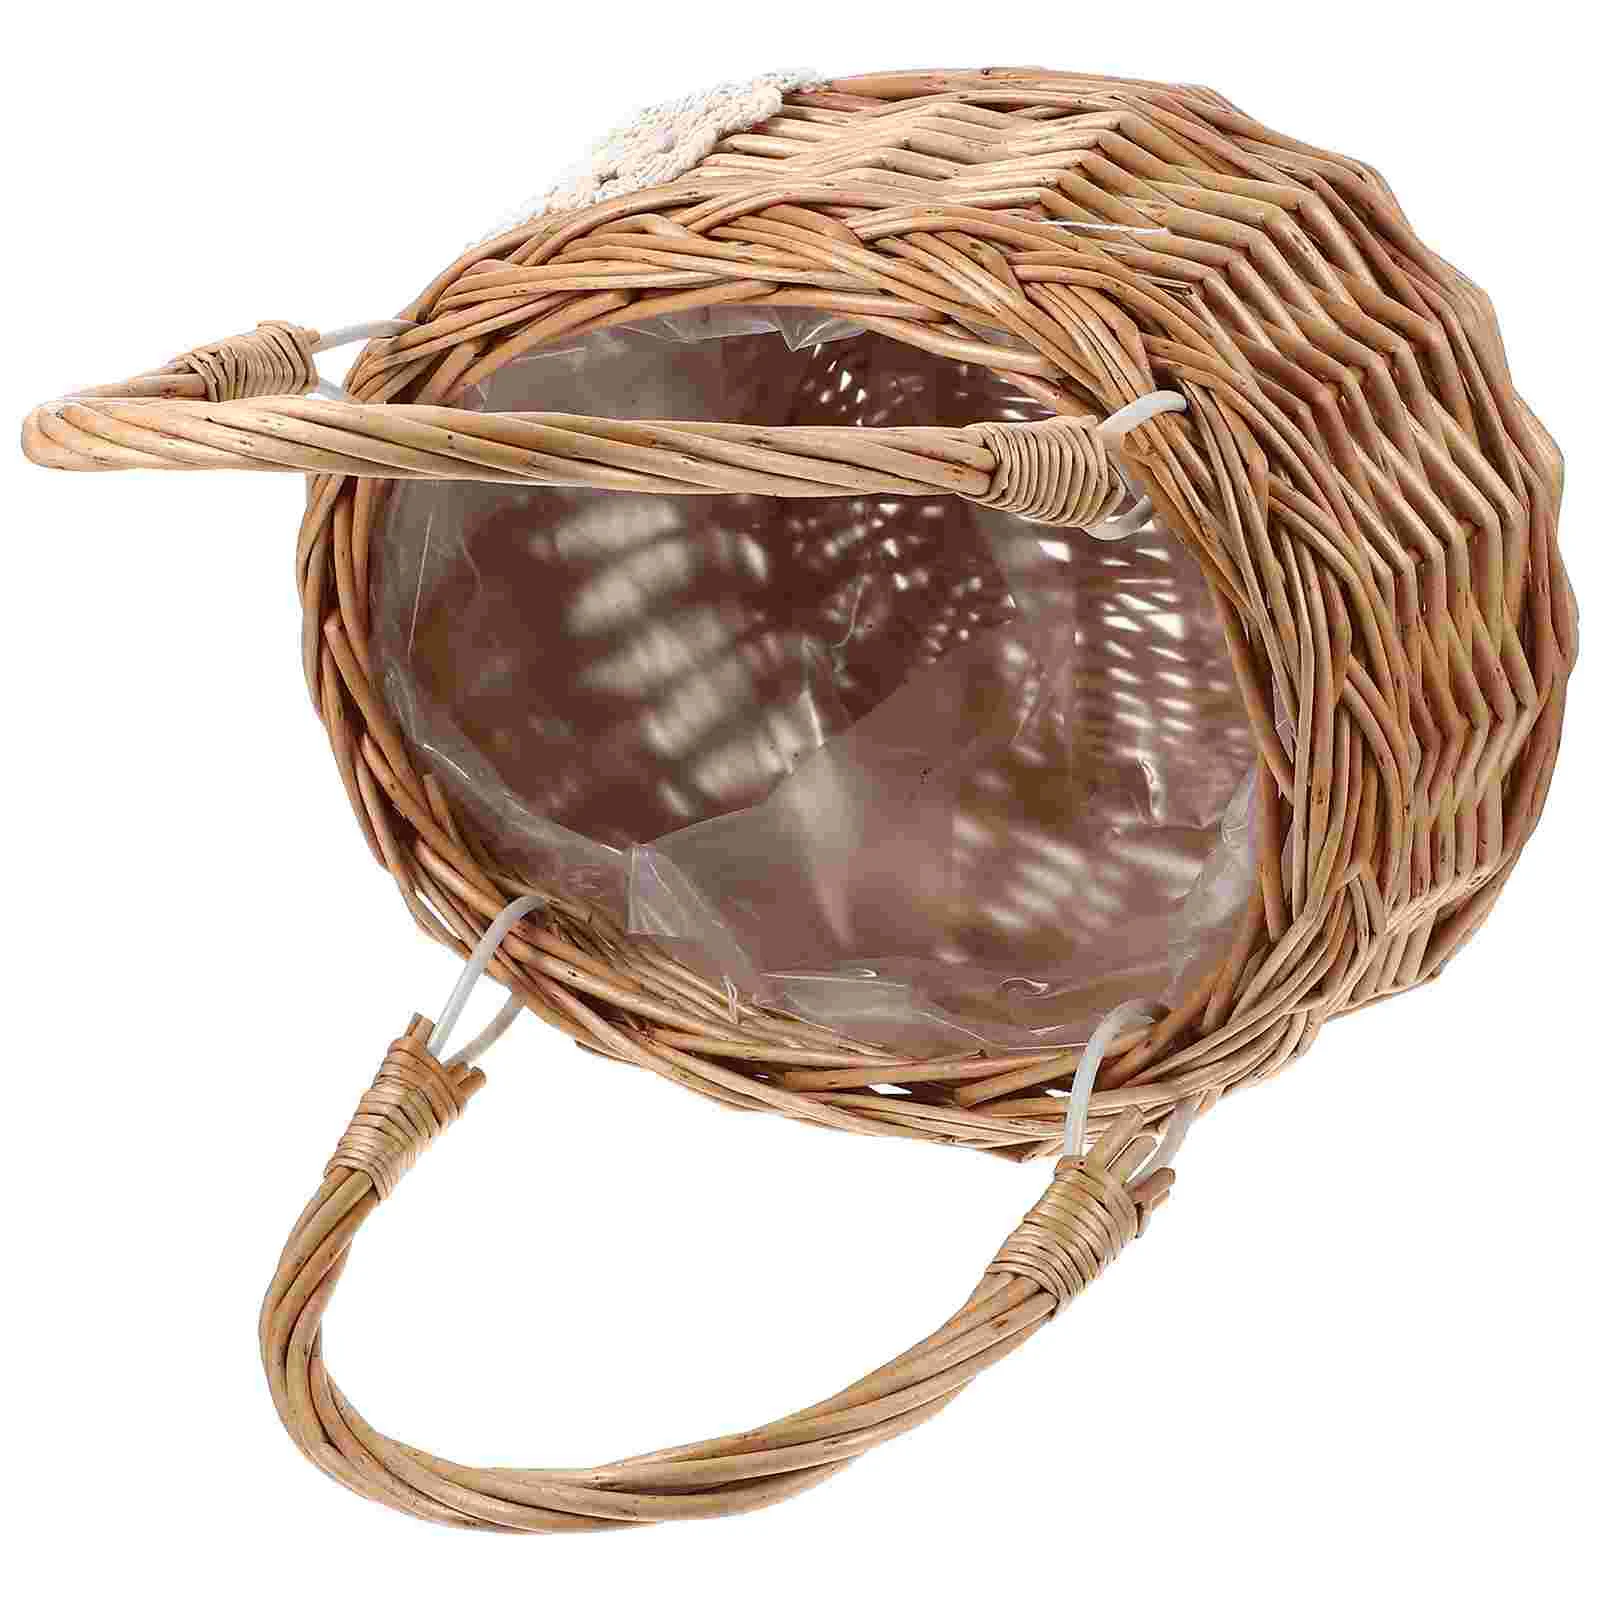 

Basket Picnic Woven Wicker Rattan Flower Baskets Storage Handle Easter Eggs Hamper Candy Vegetable Fruit Market Mini Gift